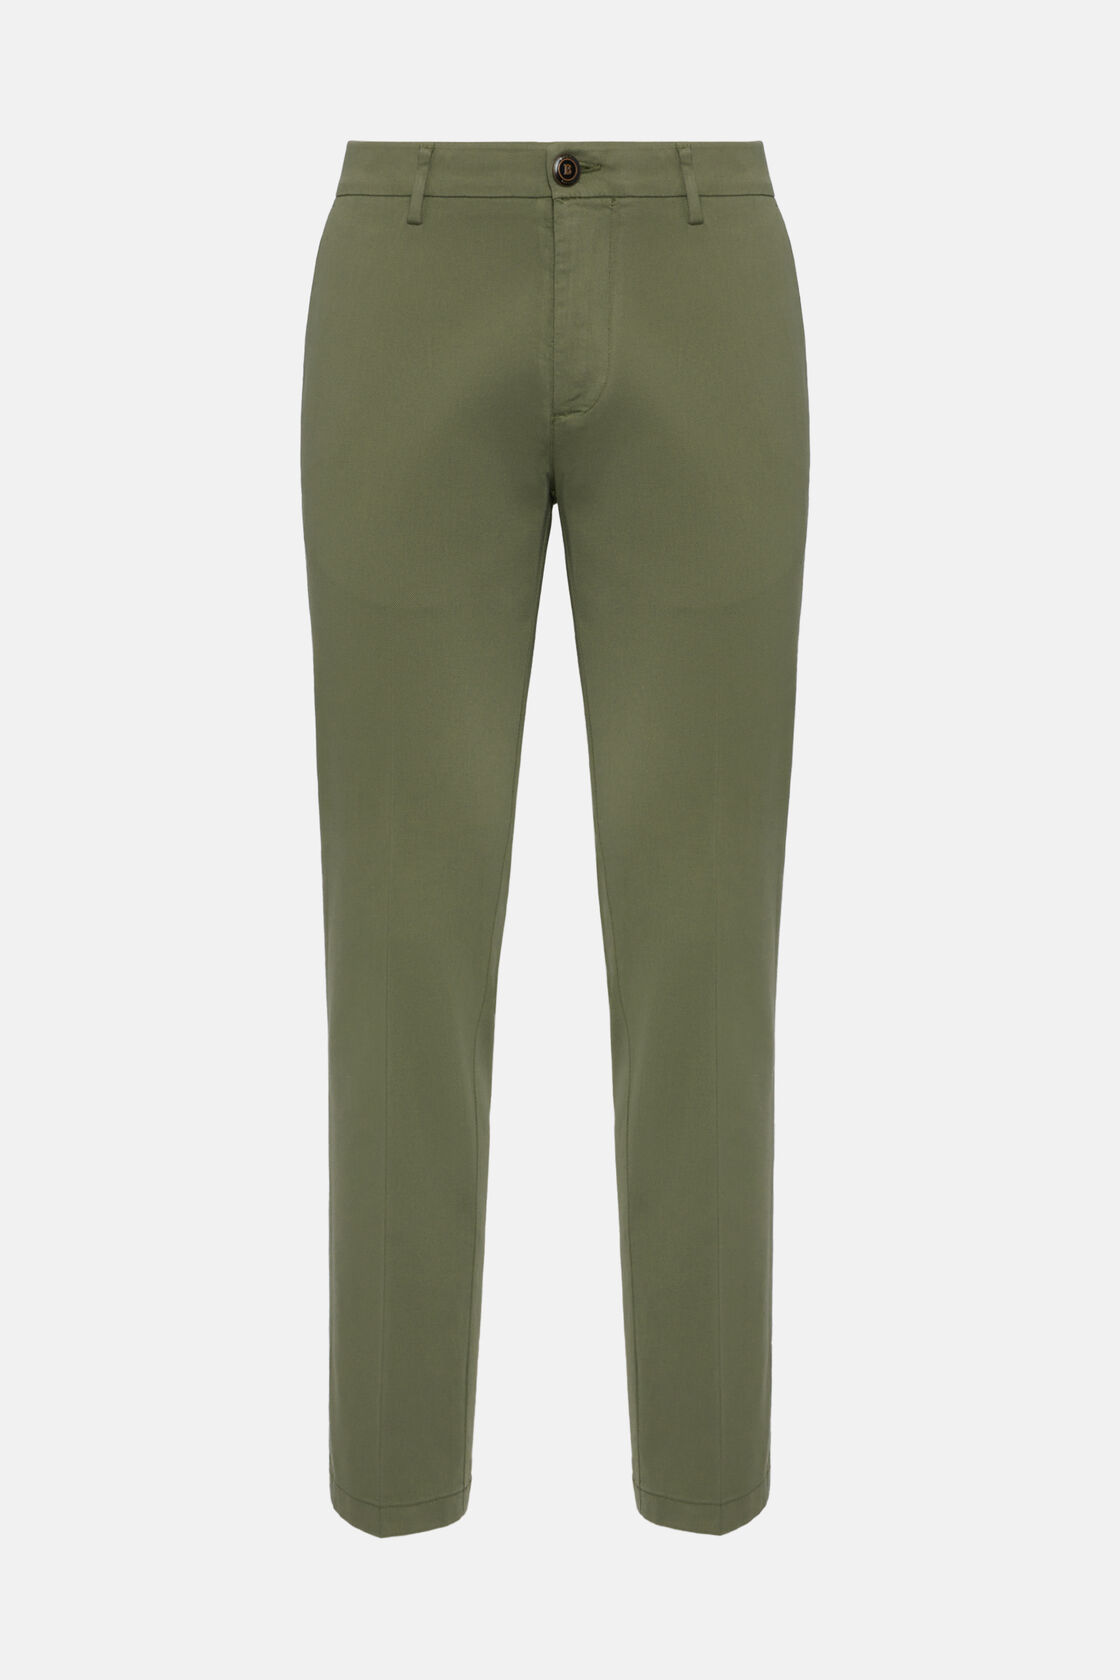 Pantalon En Coton Tencel Extensible, Military Green, hi-res